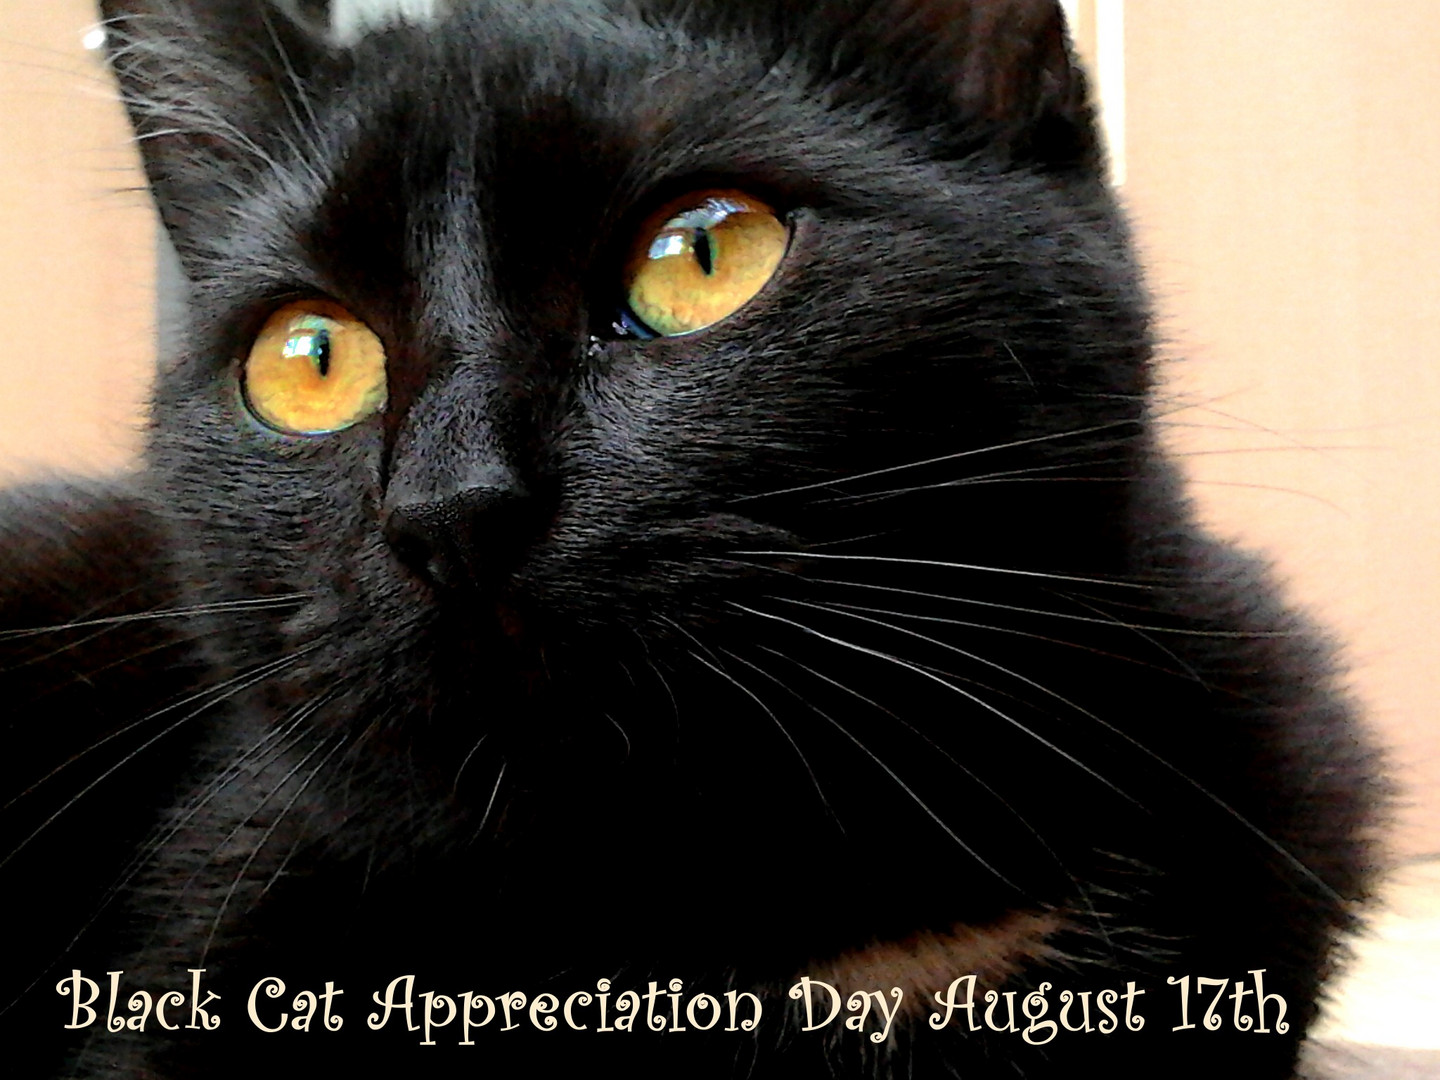 Black Cat Appreciation Day August 17th